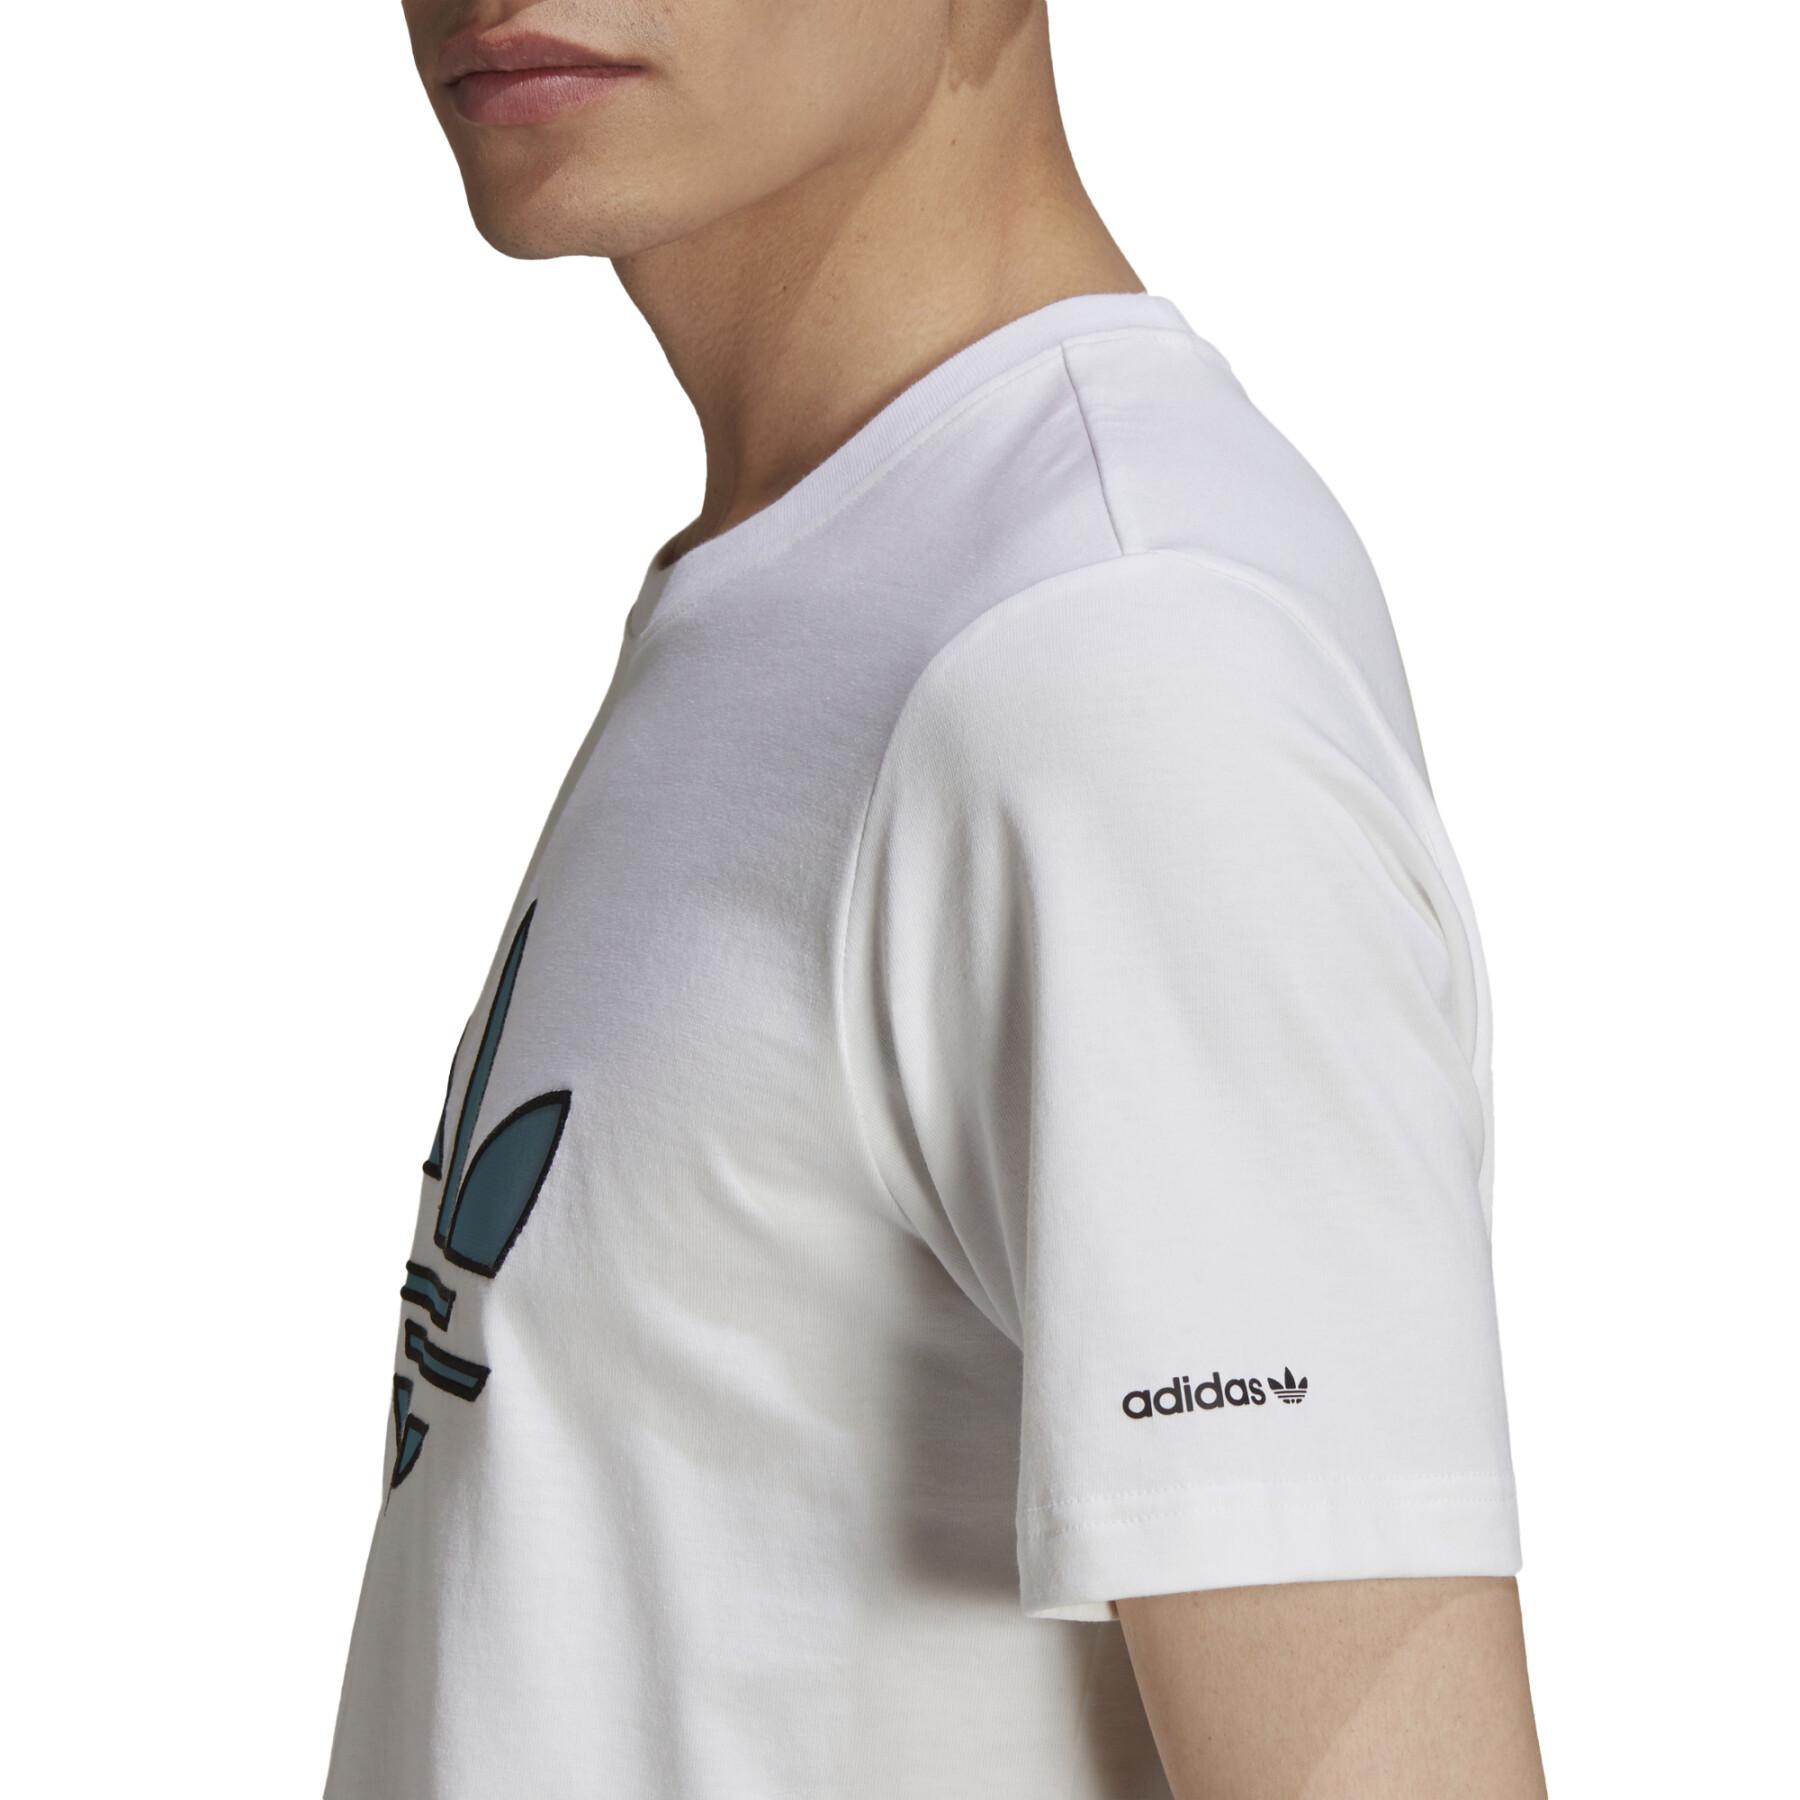 T-shirt adidas Originals Adicolor Shattered Trefoil